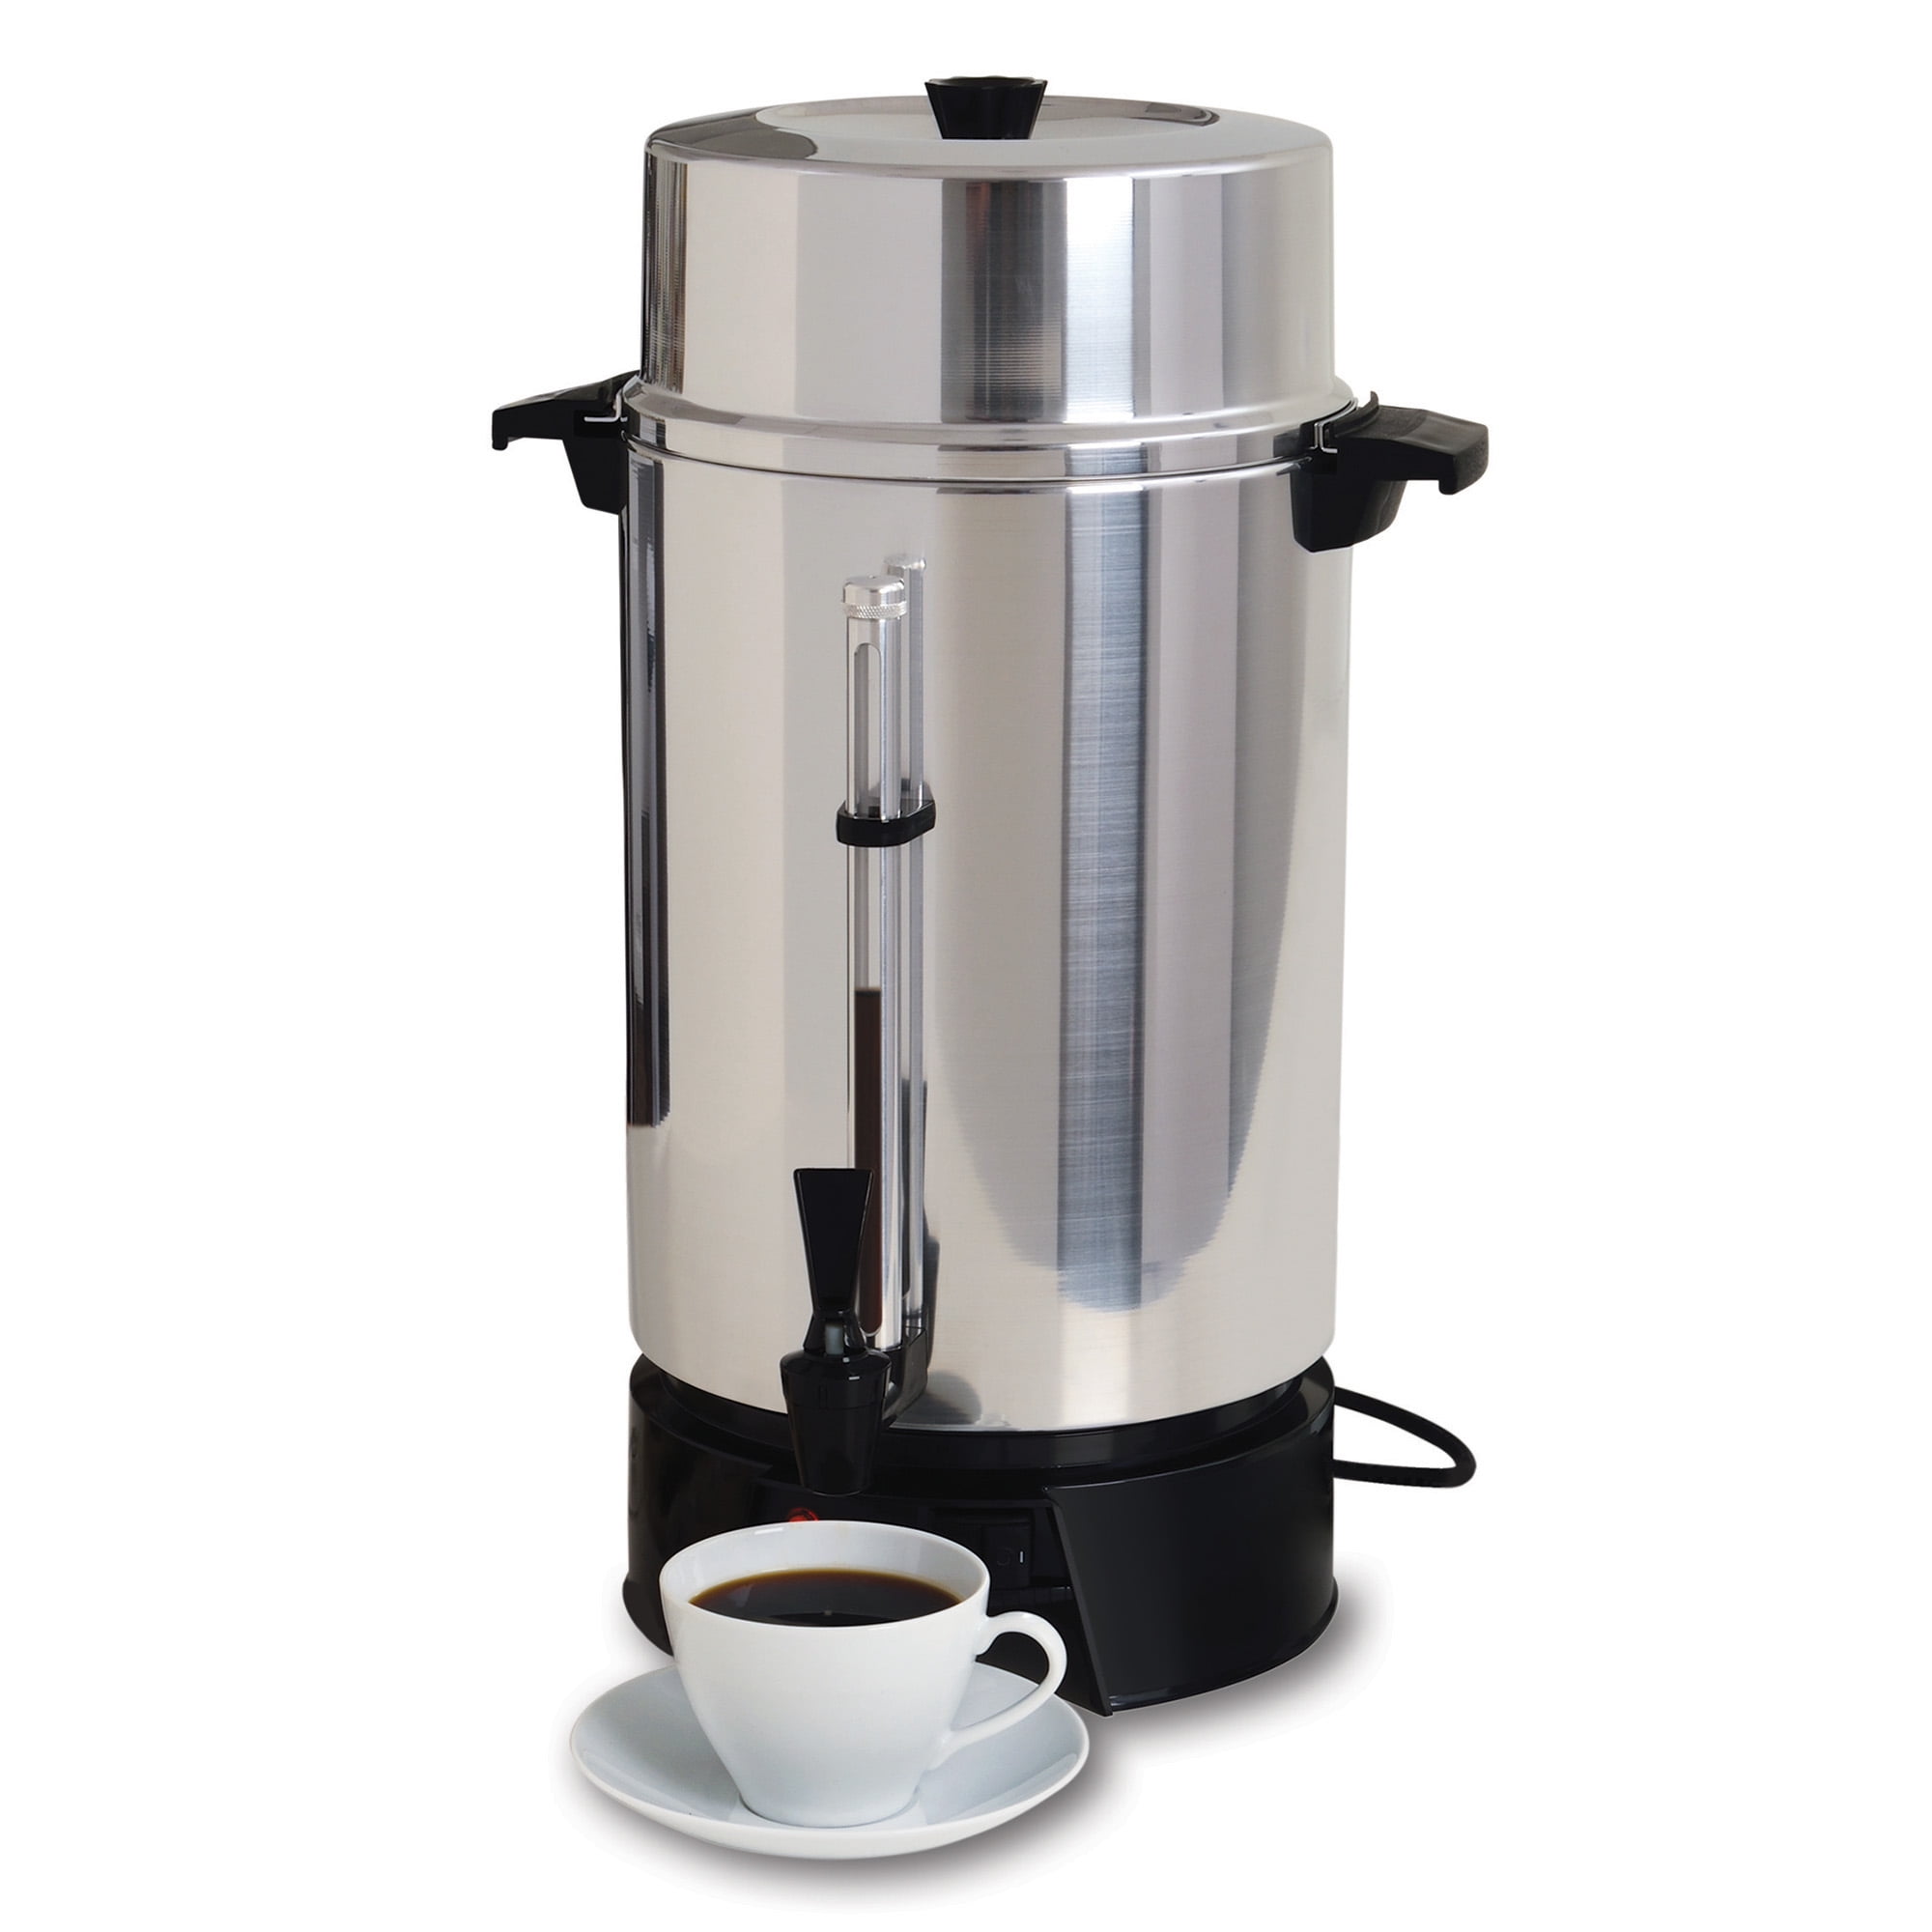 Mr Coffee 4 Cup White Coffee Maker - Gillman Home Center